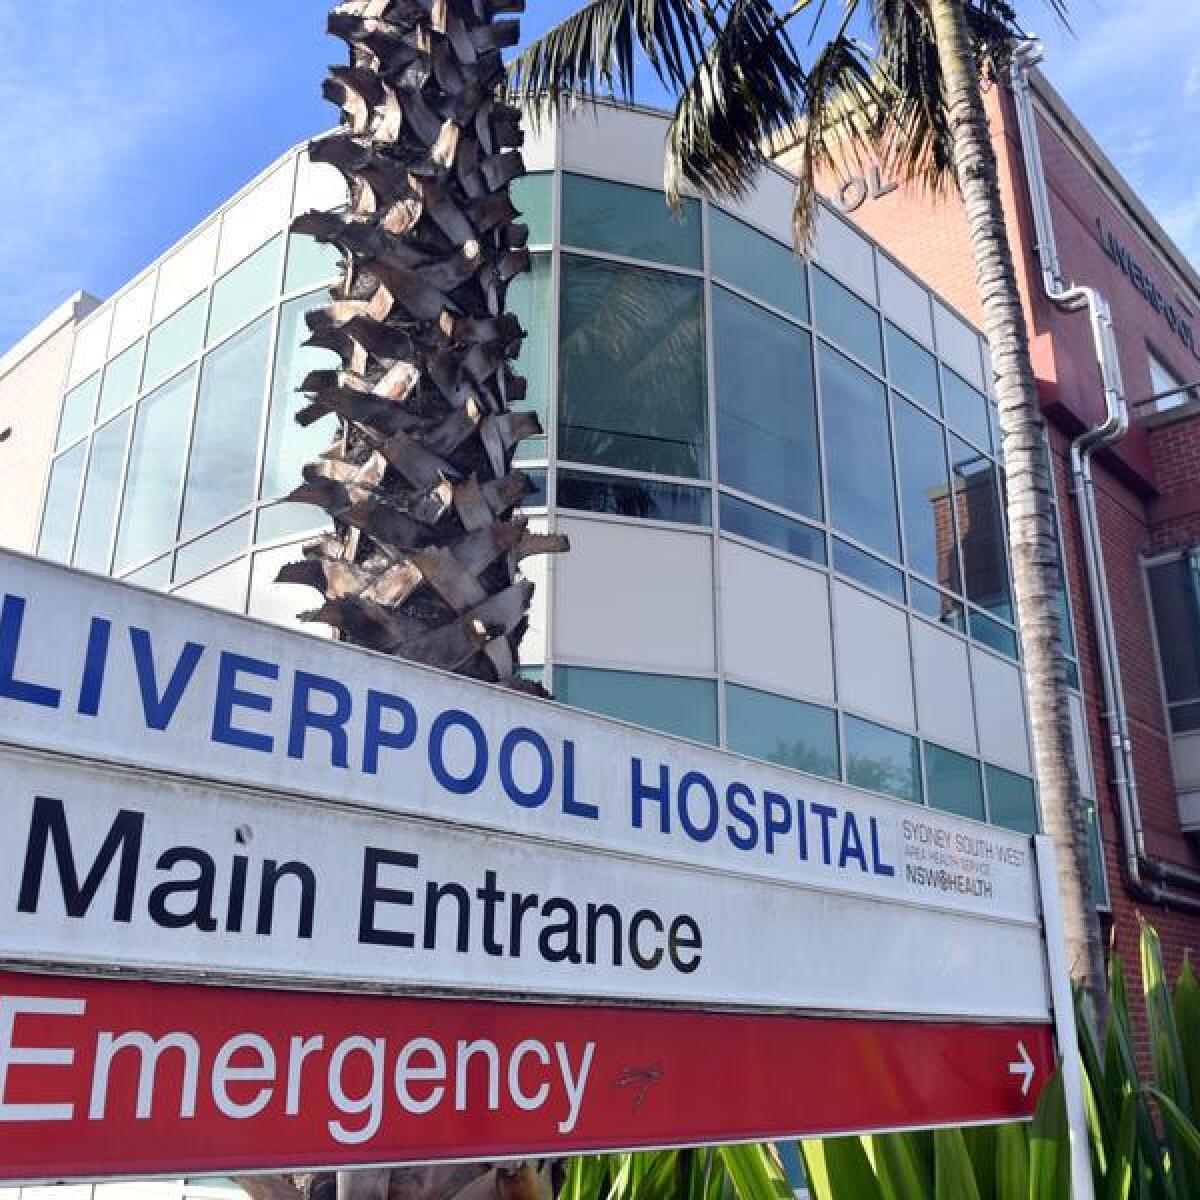 Liverpool Hospital, Sydney